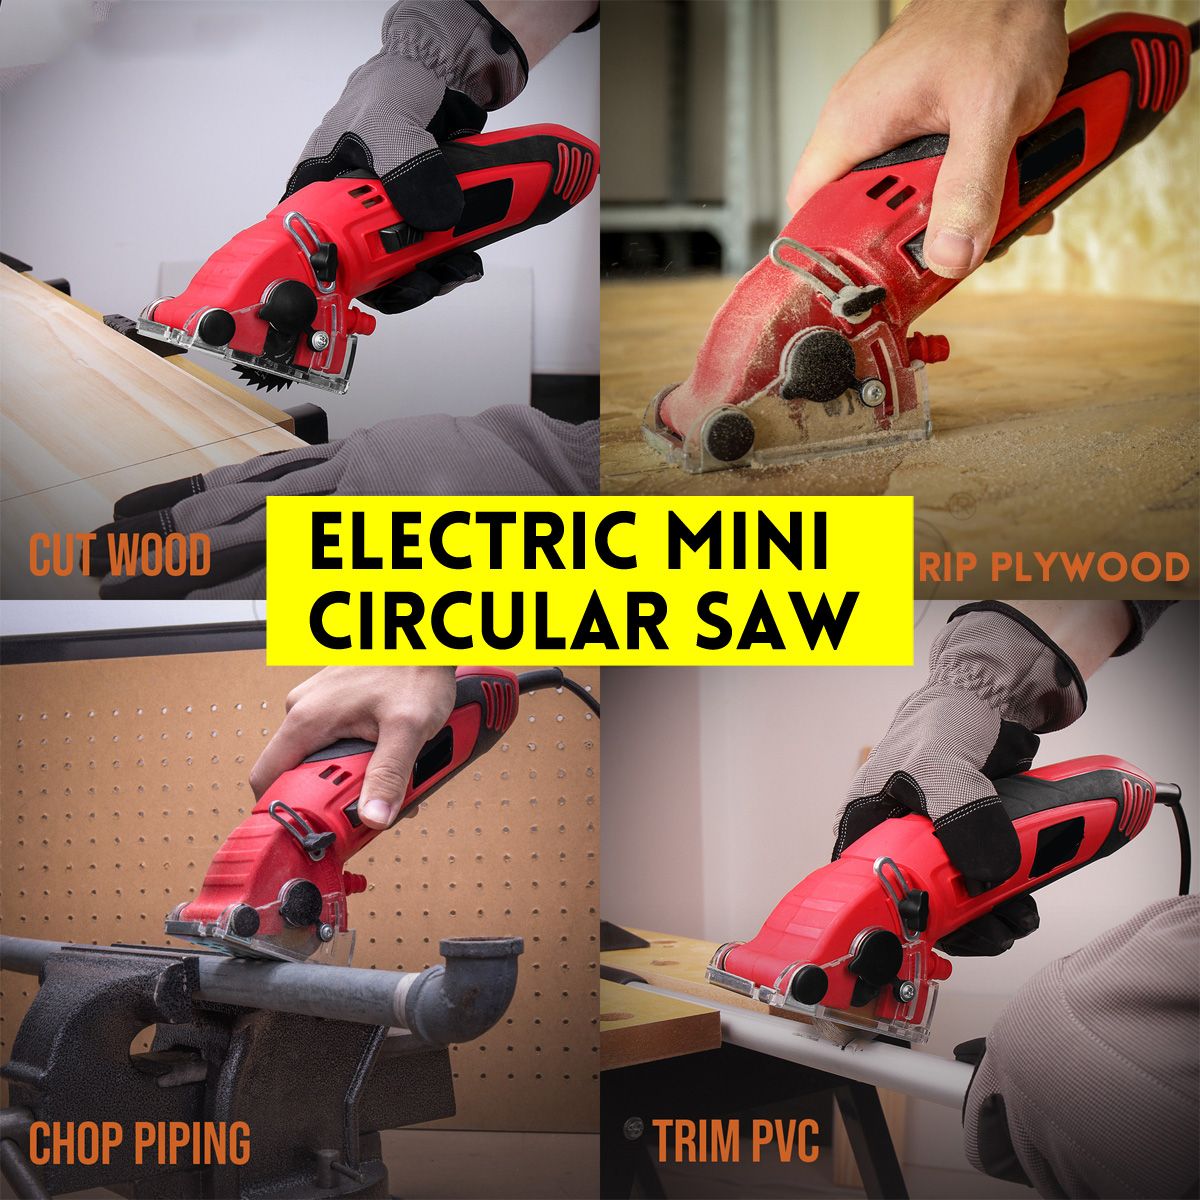 400W-110V220V-Electric-Mini-Handheld-Circular-Saw-Disc-Cutting-Tool-Wood-PVC-Tube-1711661